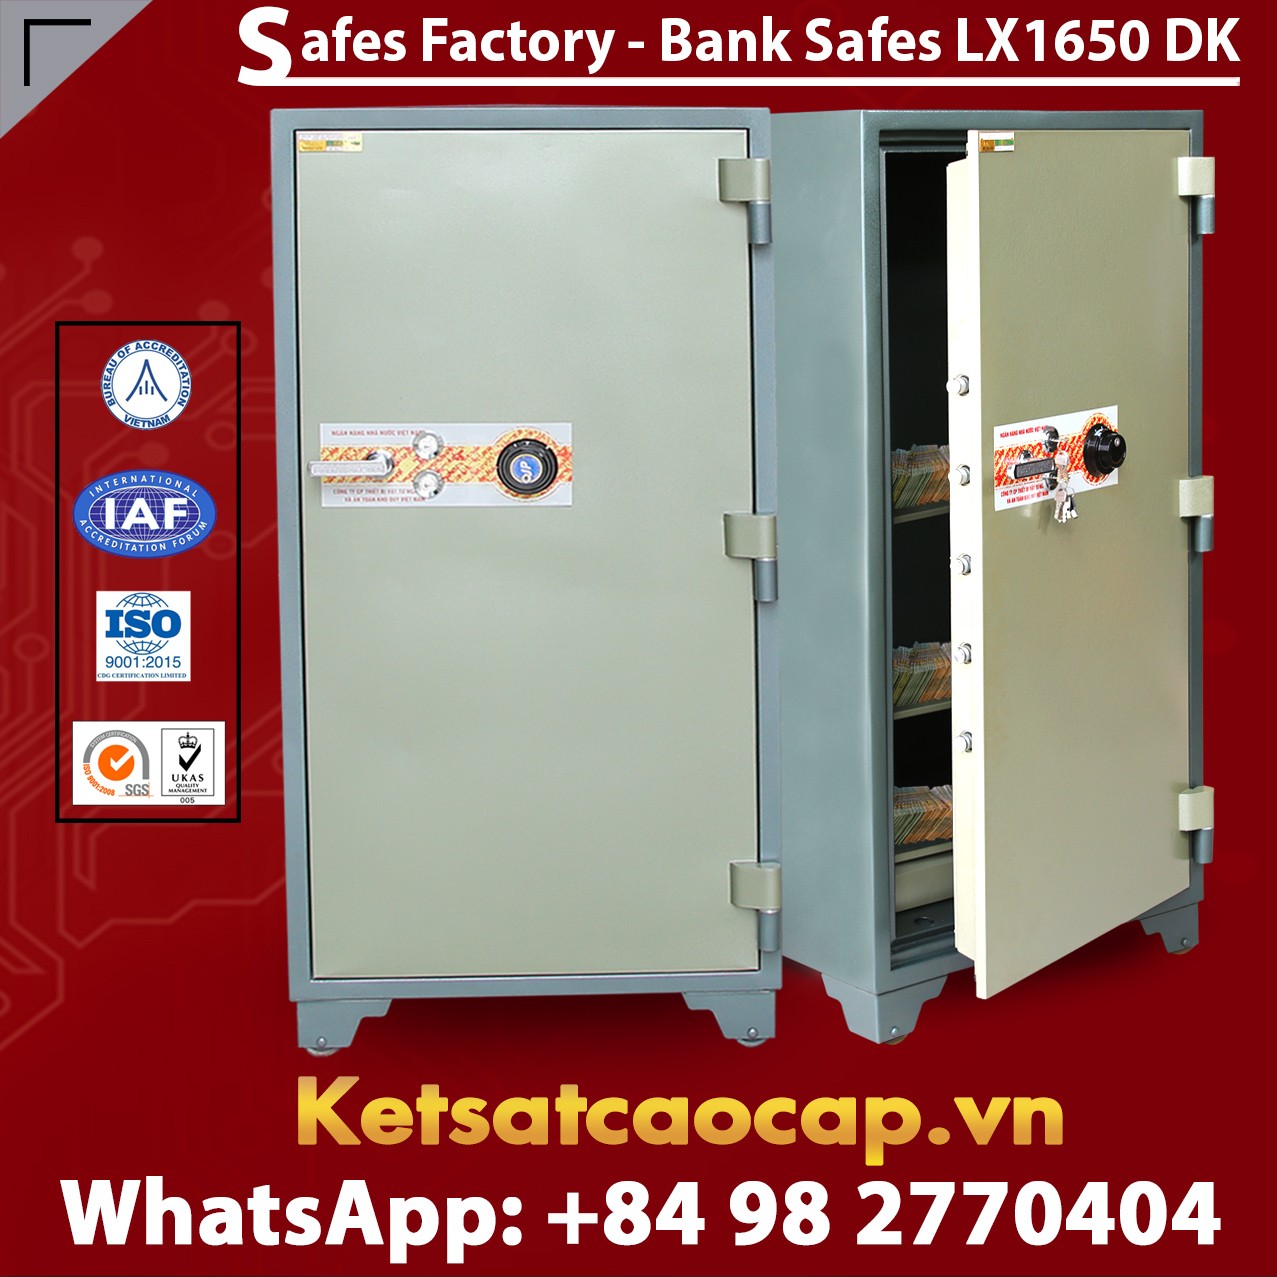 Bank Safes LX1650 DK The Best Bank Safes In the World From BEMC Safe